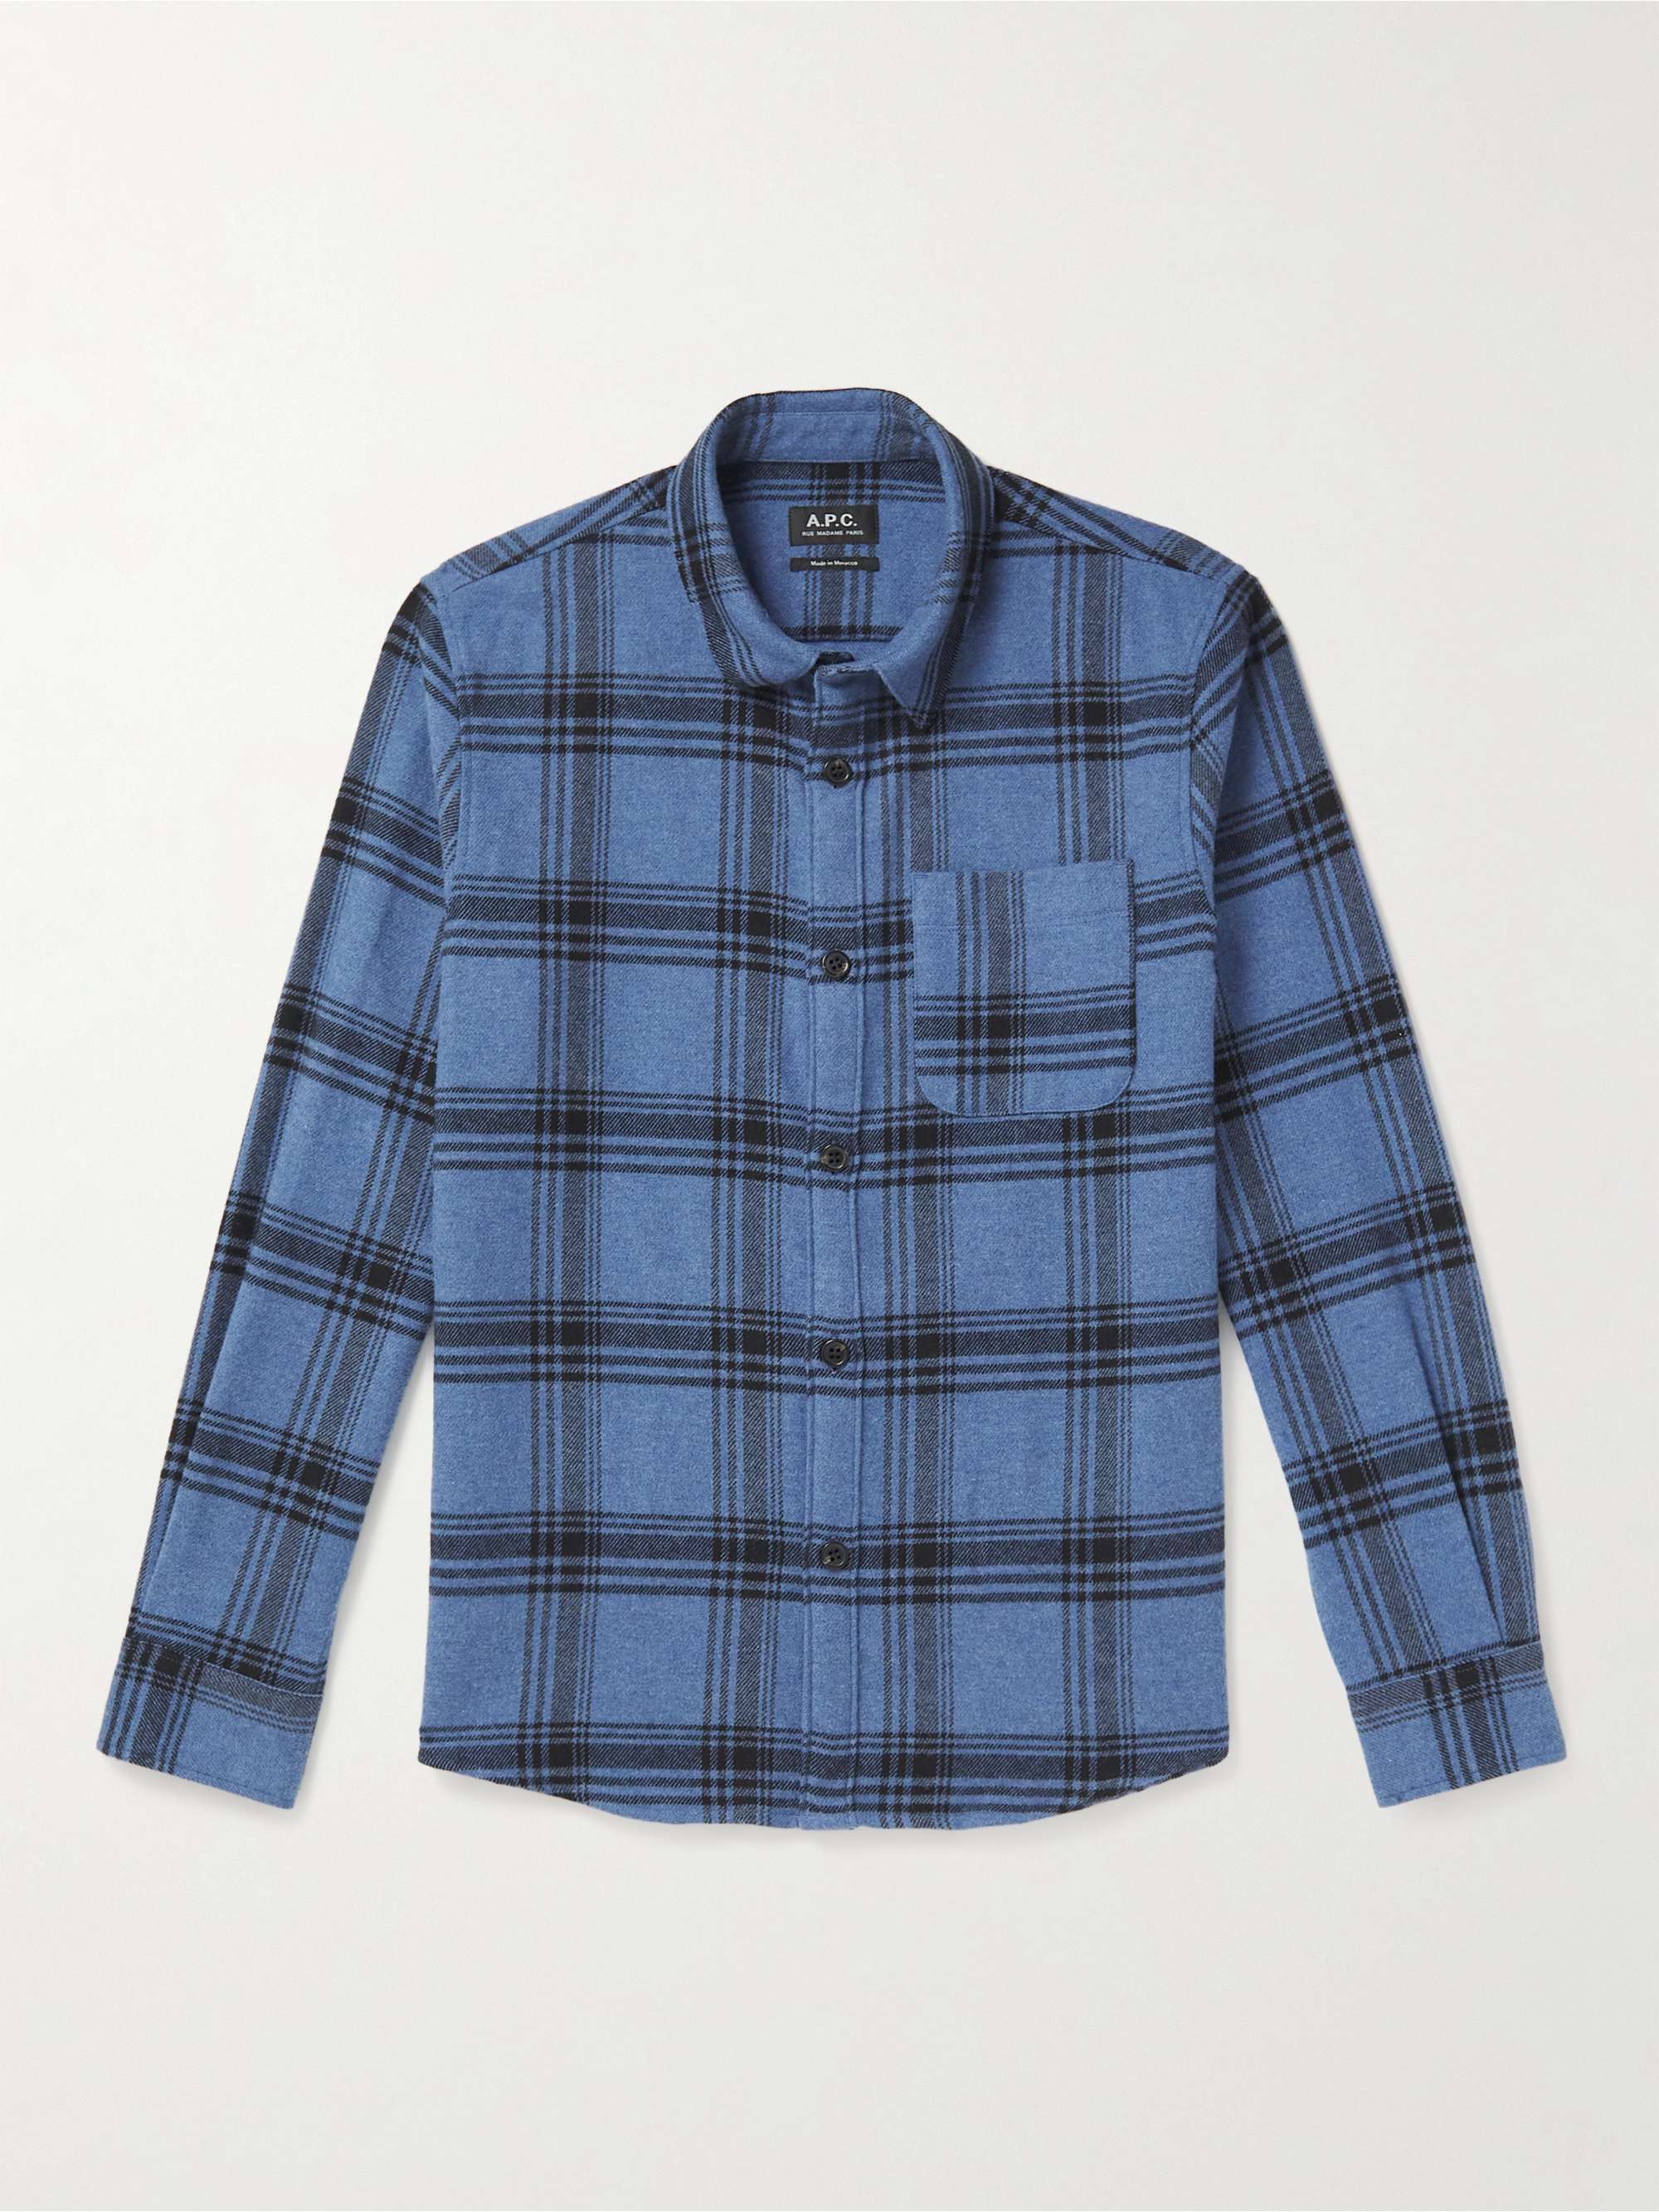 A.P.C. Trek Checked Cotton-Blend Flannel Shirt for Men | MR PORTER